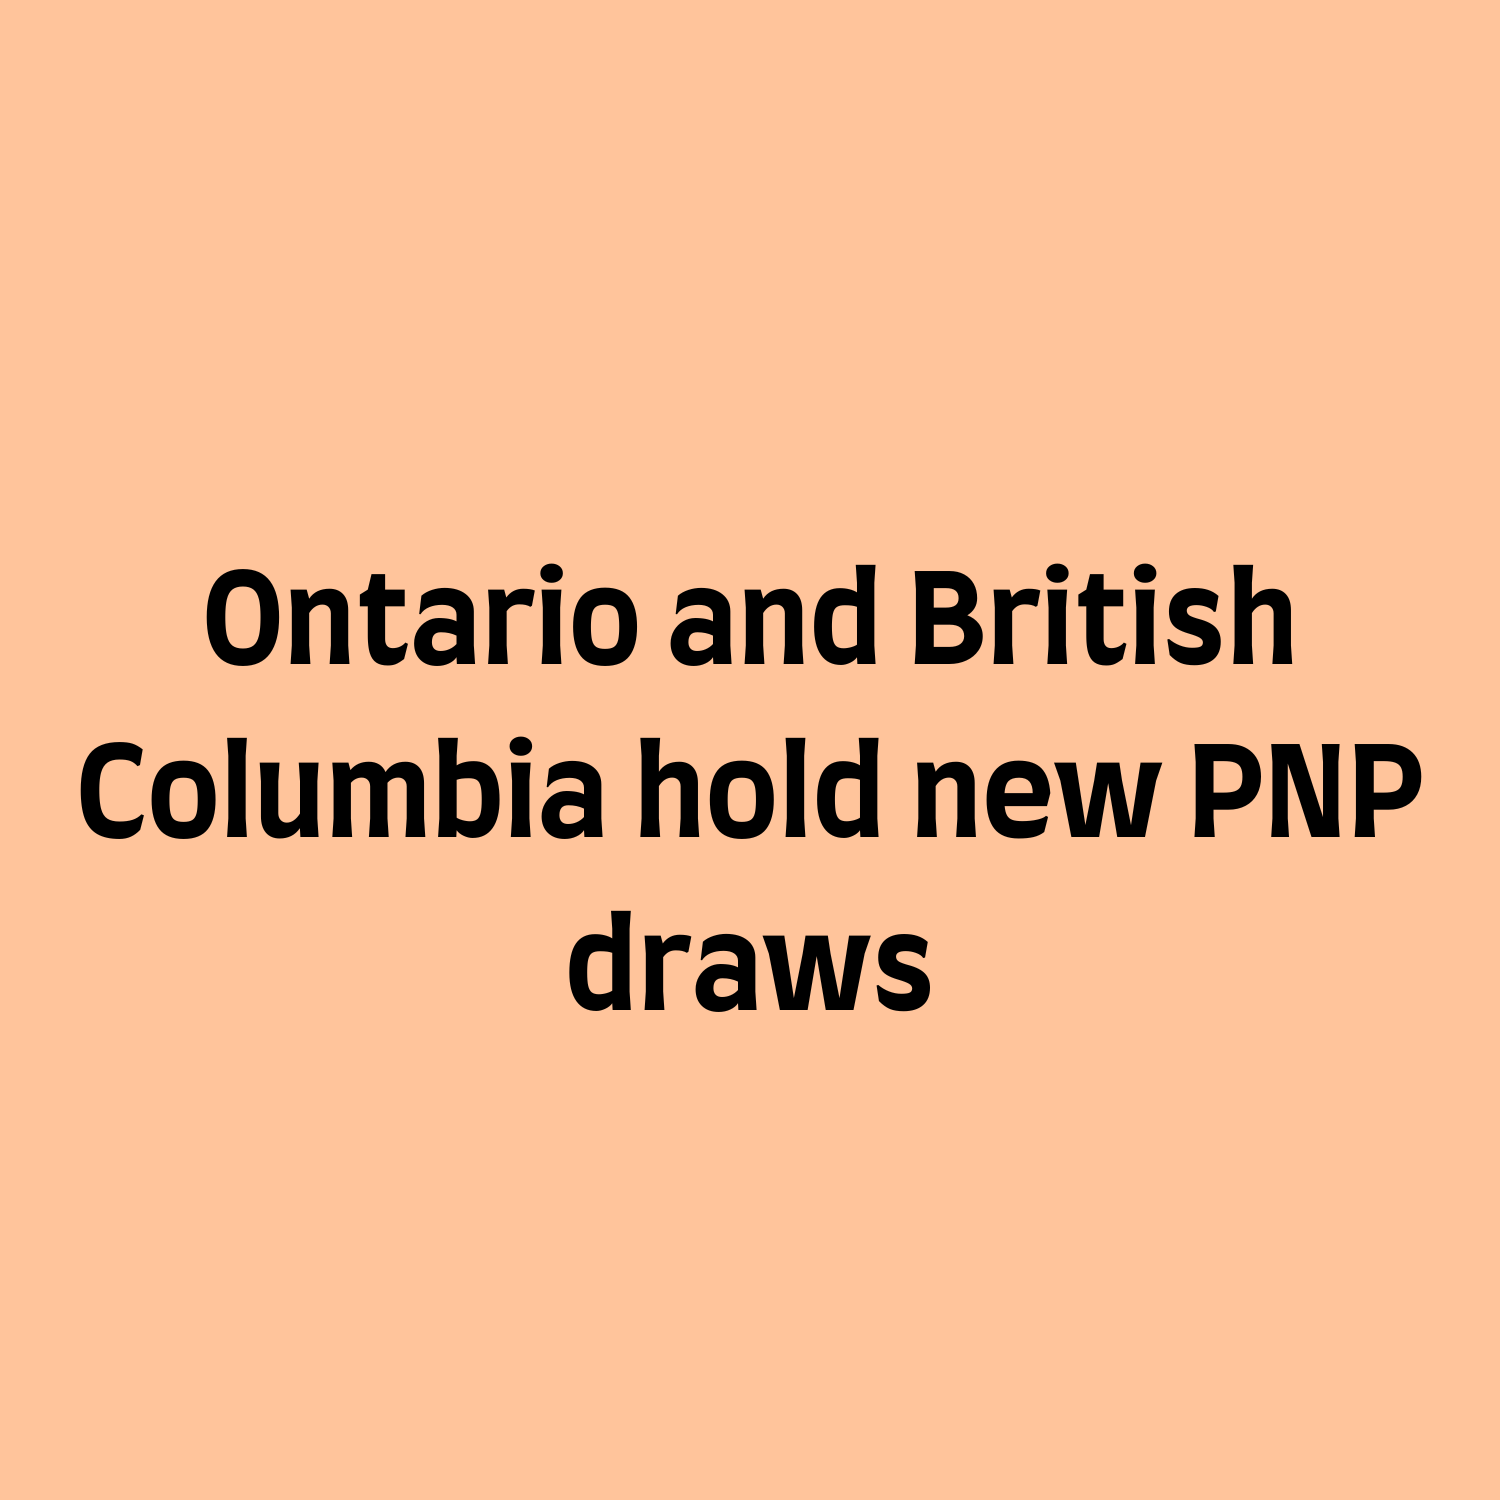 Ontario and British Columbia hold new PNP draws